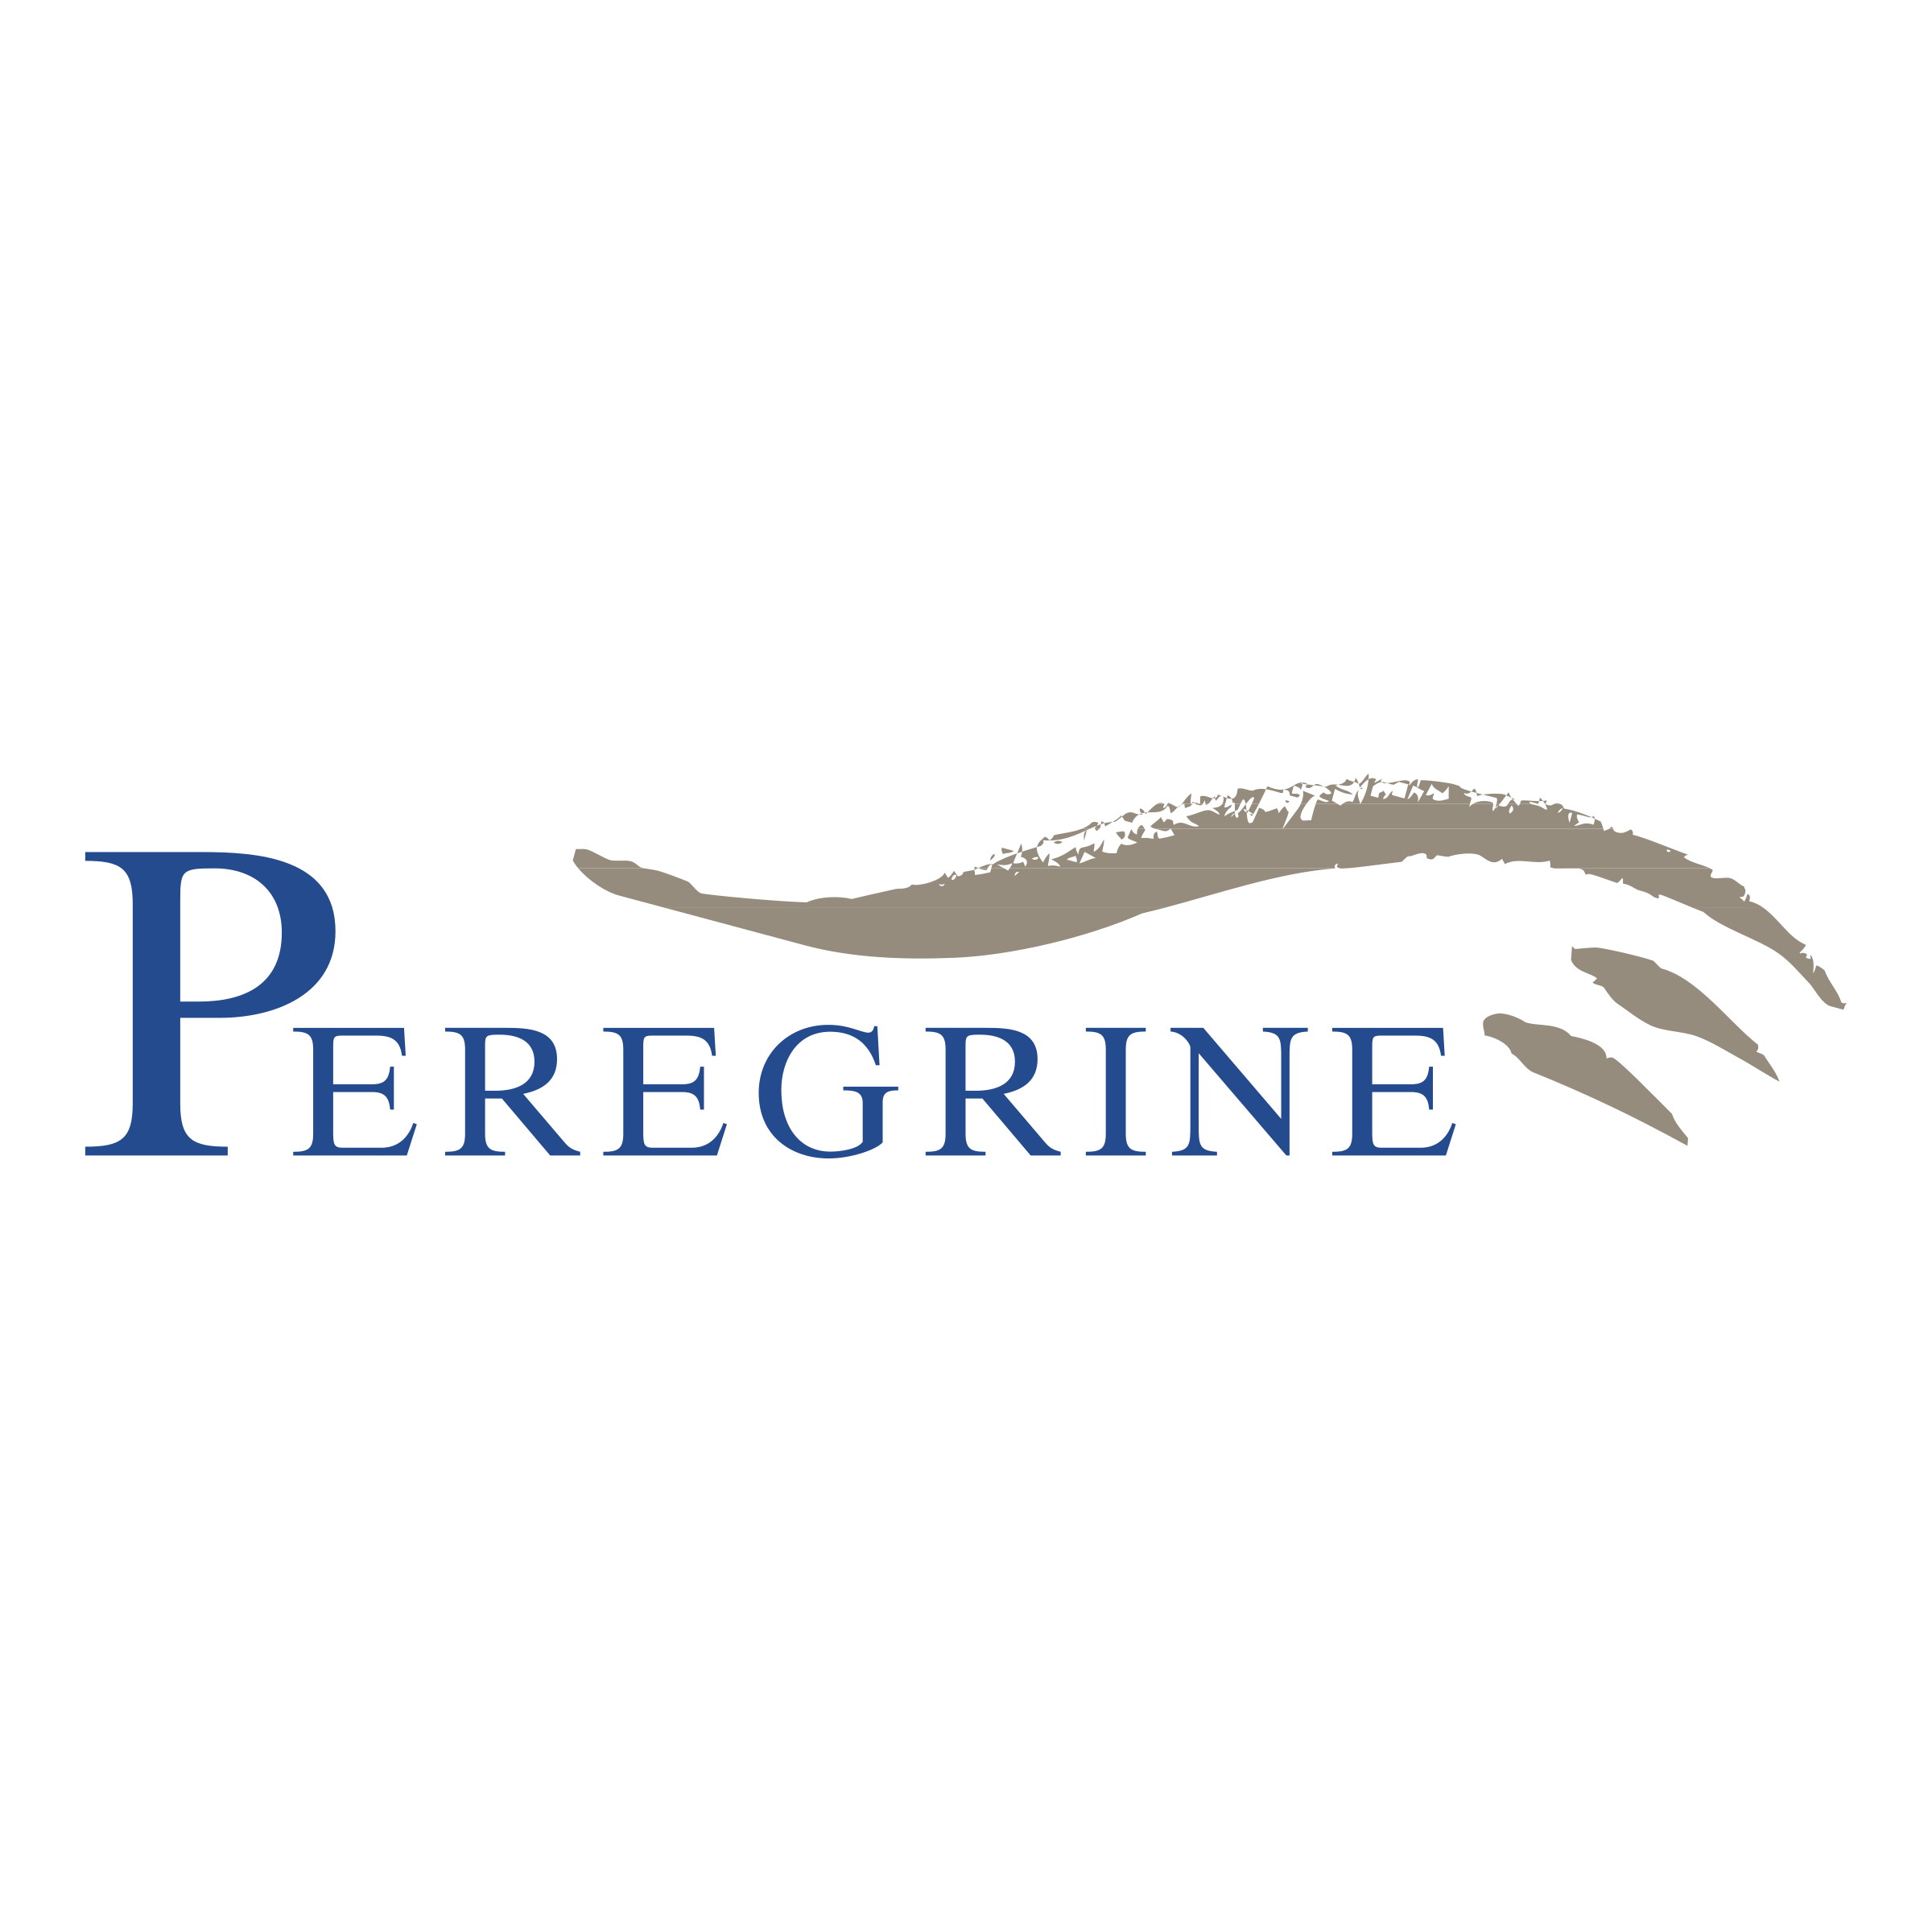 Peregrine Logo - Peregrine Logo PNG Transparent & SVG Vector - Freebie Supply